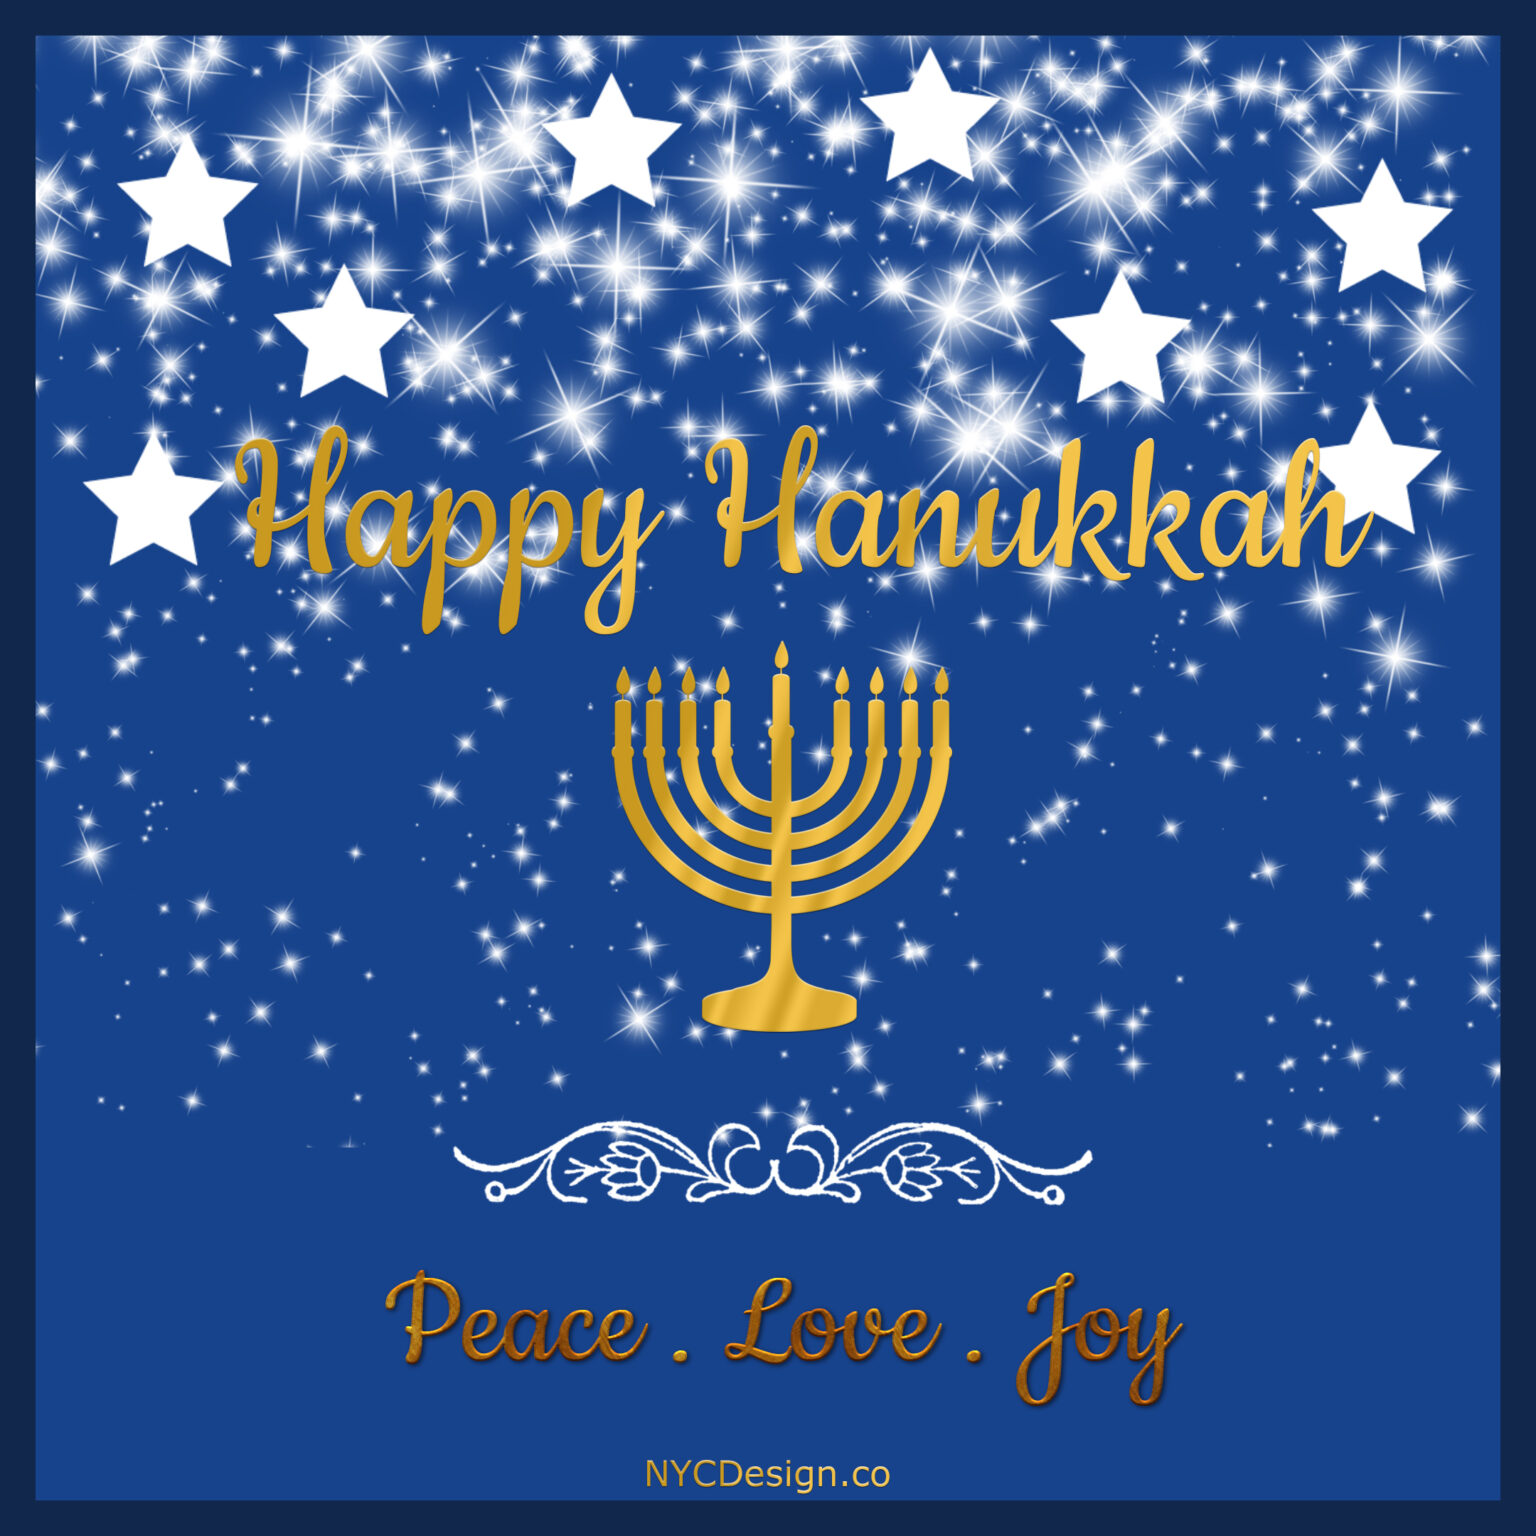 Happy Hanukkah Cards Free Printable NYCDesign co: Printable Things